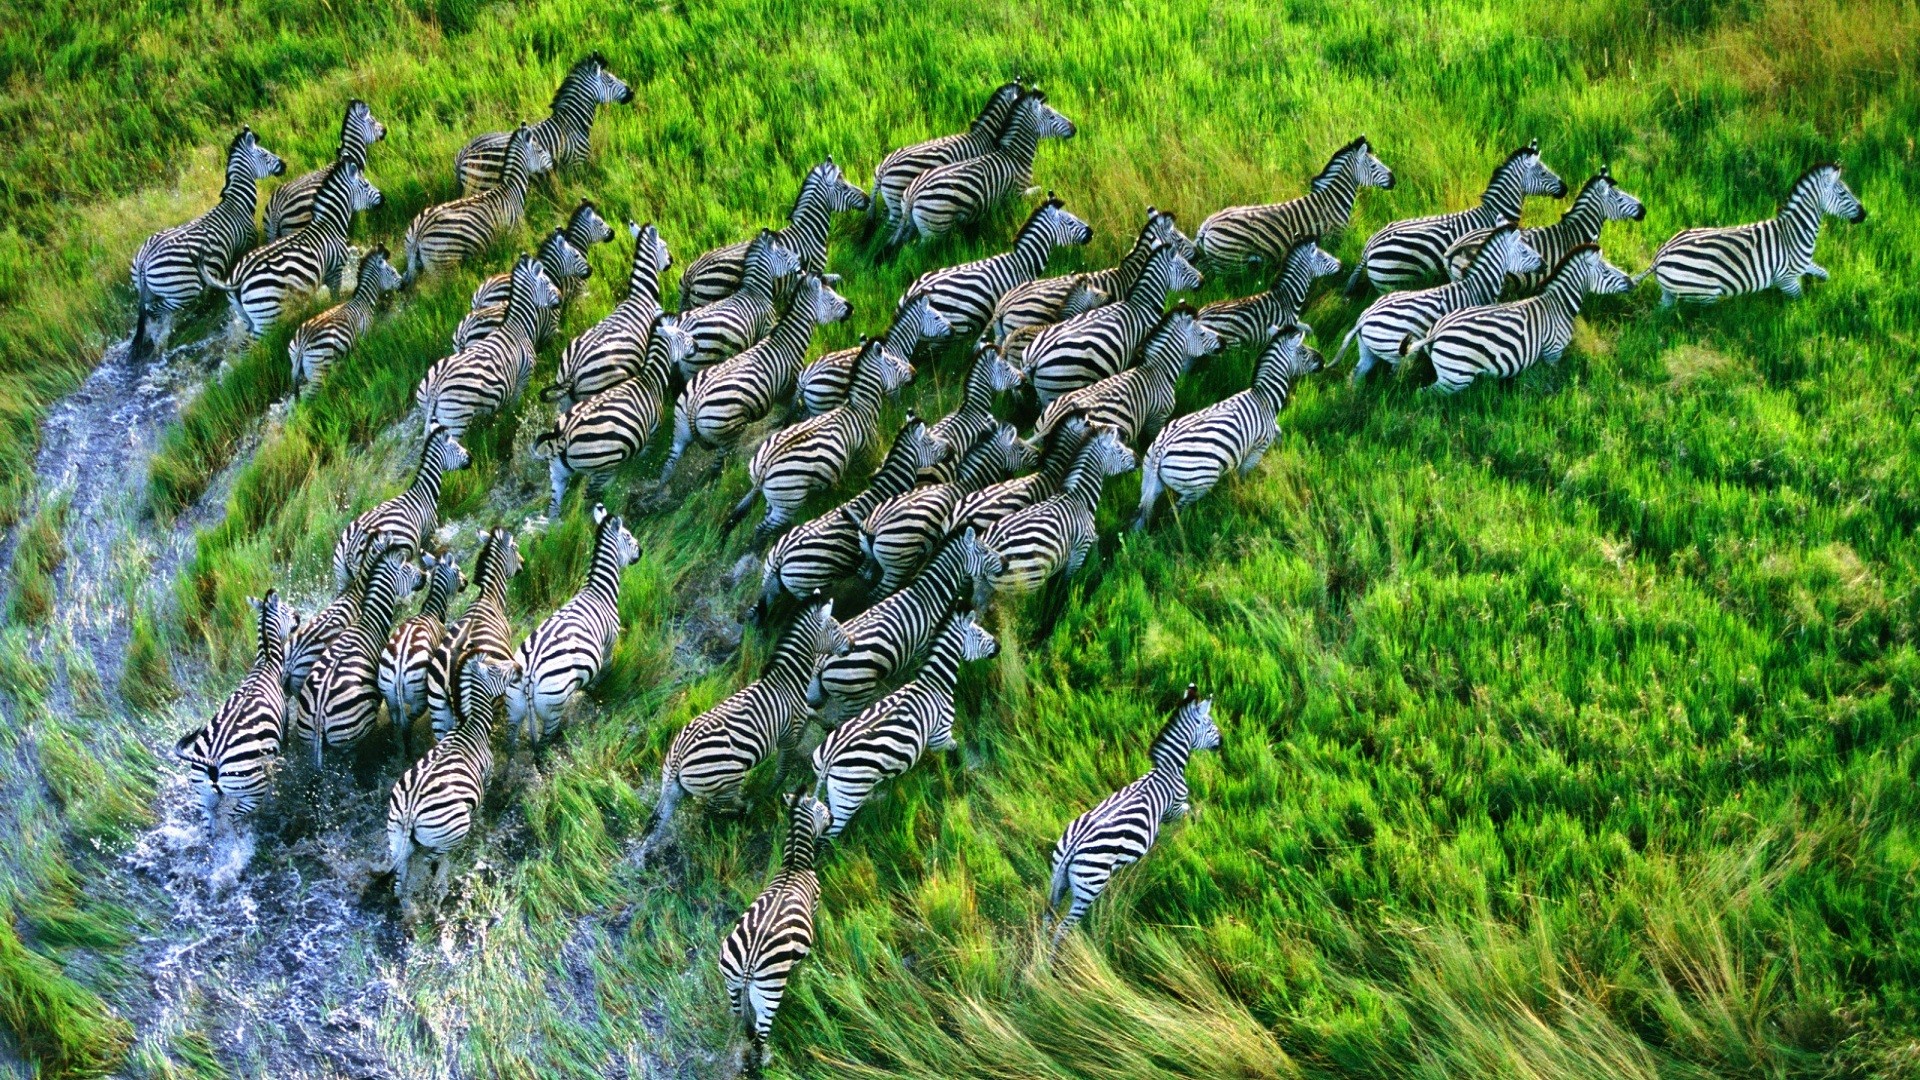 General 1920x1080 nature landscape animals zebras HDR mammals